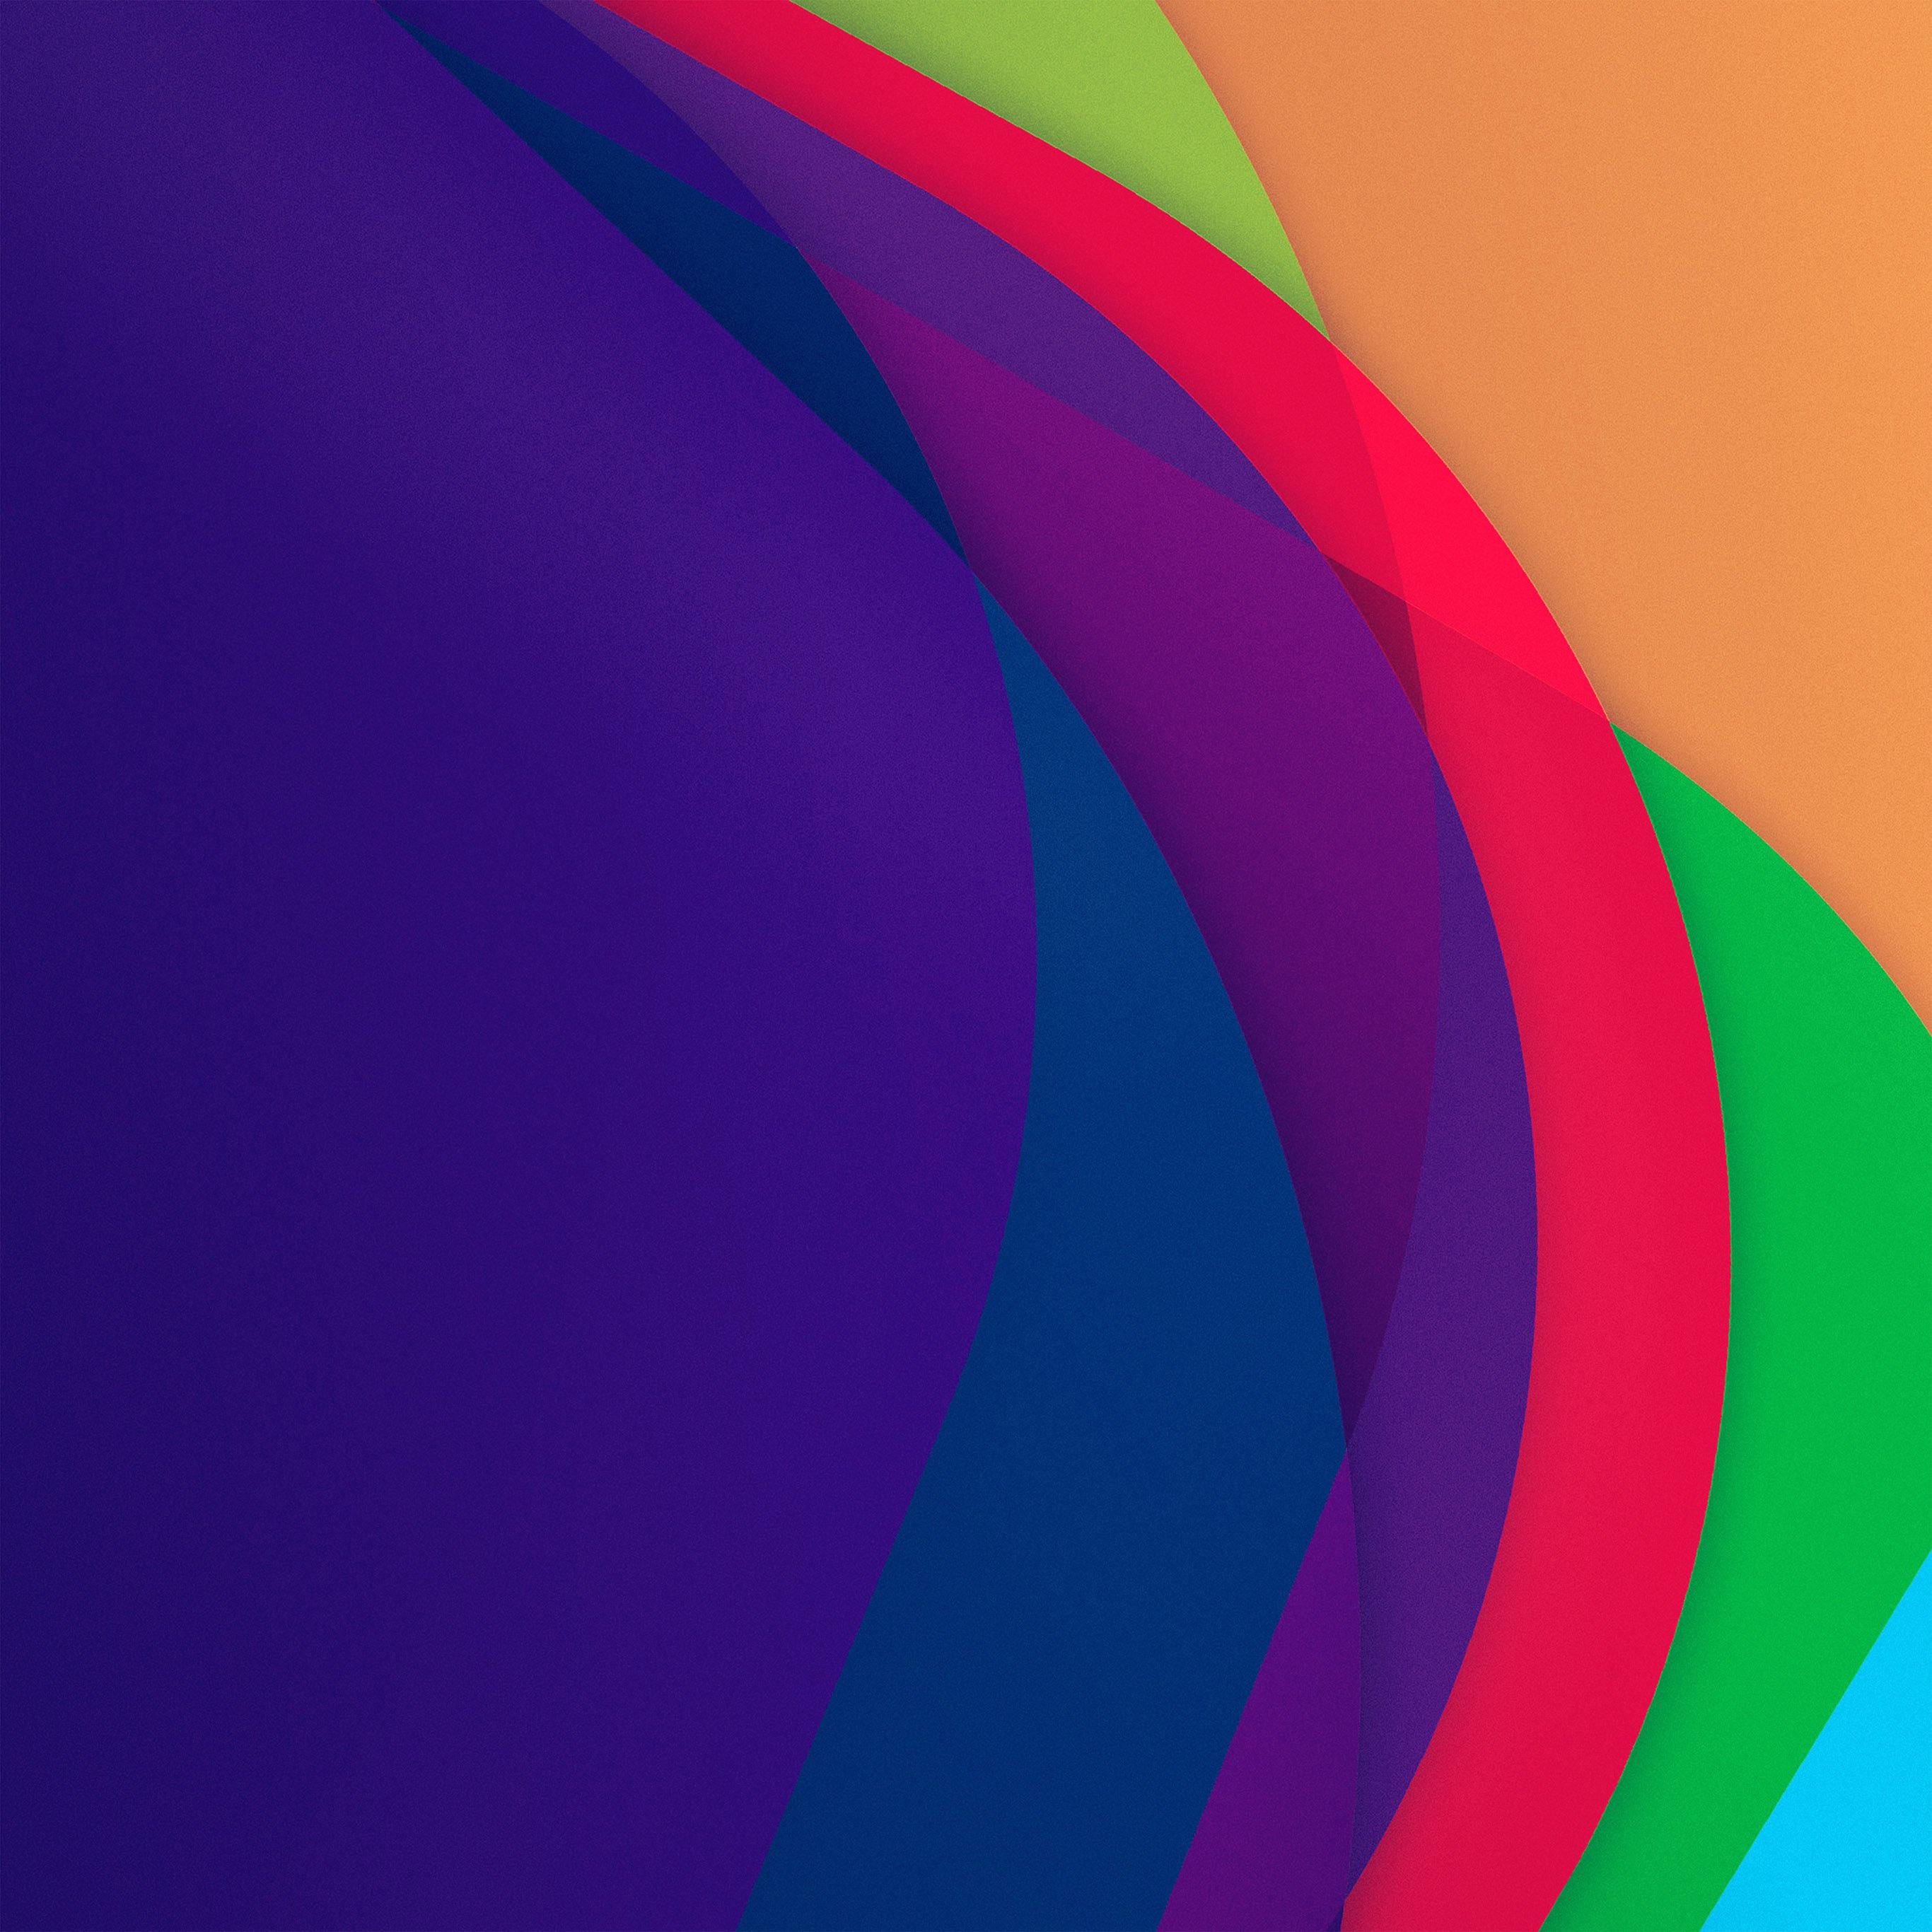 vp70-rainbow-color-art-pattern.jpg